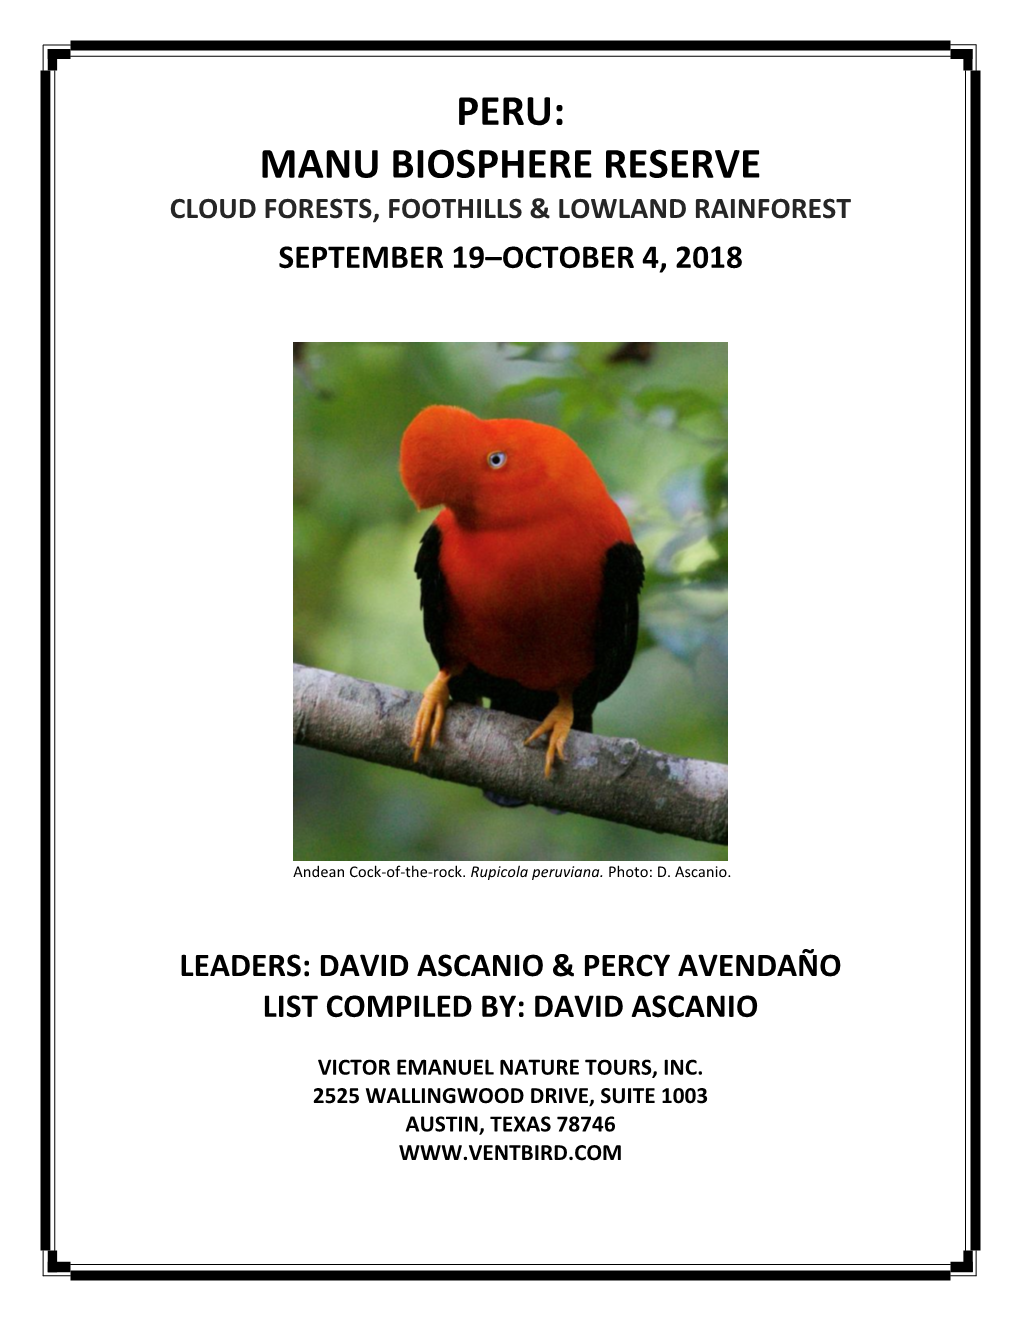 Manu Biosphere Reserve Cloud Forests, Foothills & Lowland Rainforest